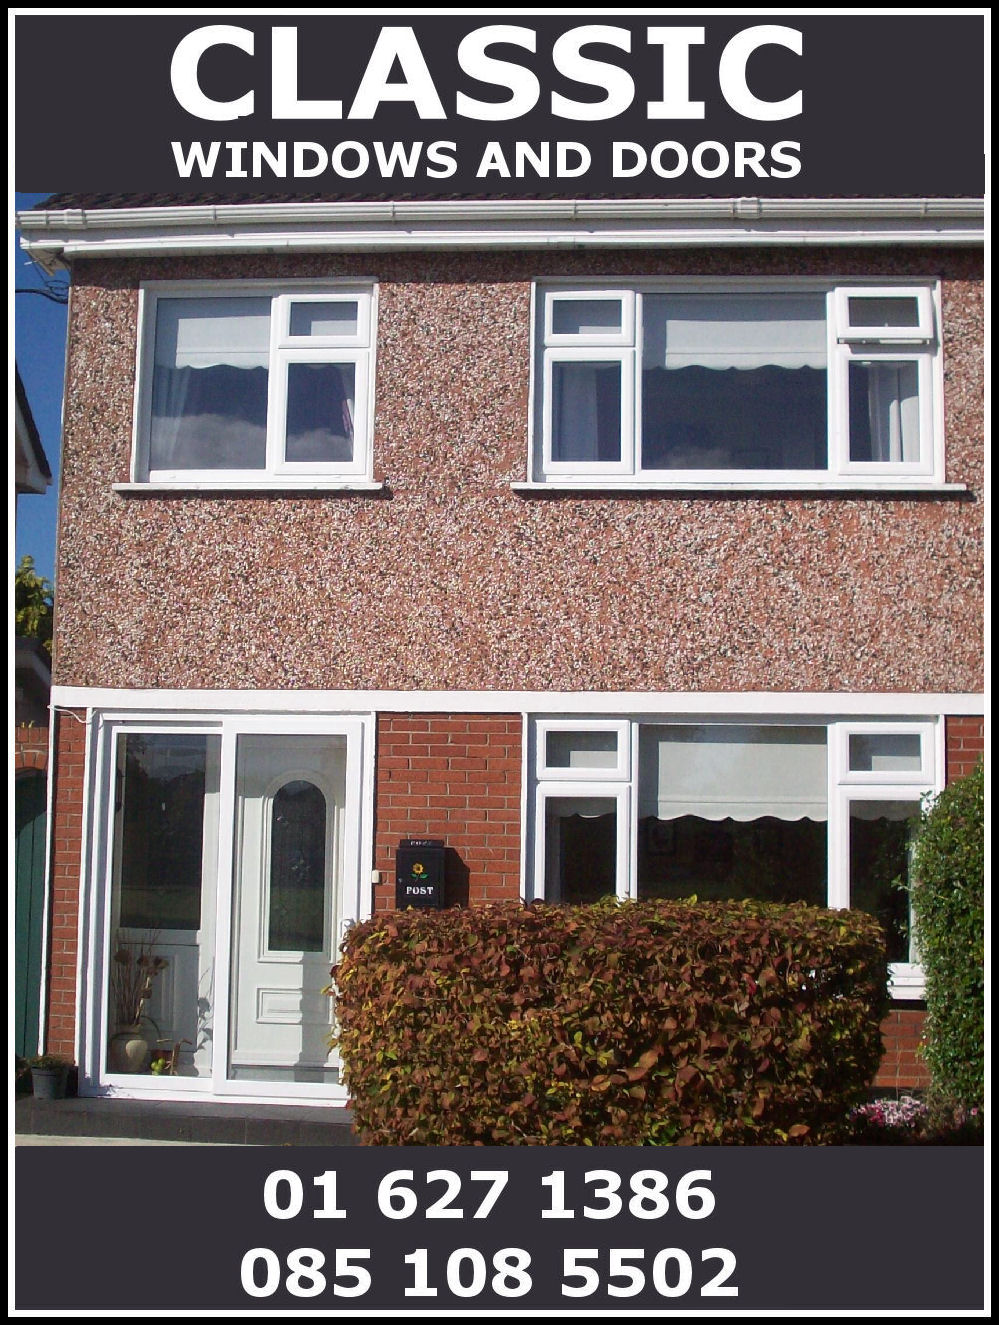 Classic Windows & Doors - Tel:- 085 108 5502 / 01 627 5502